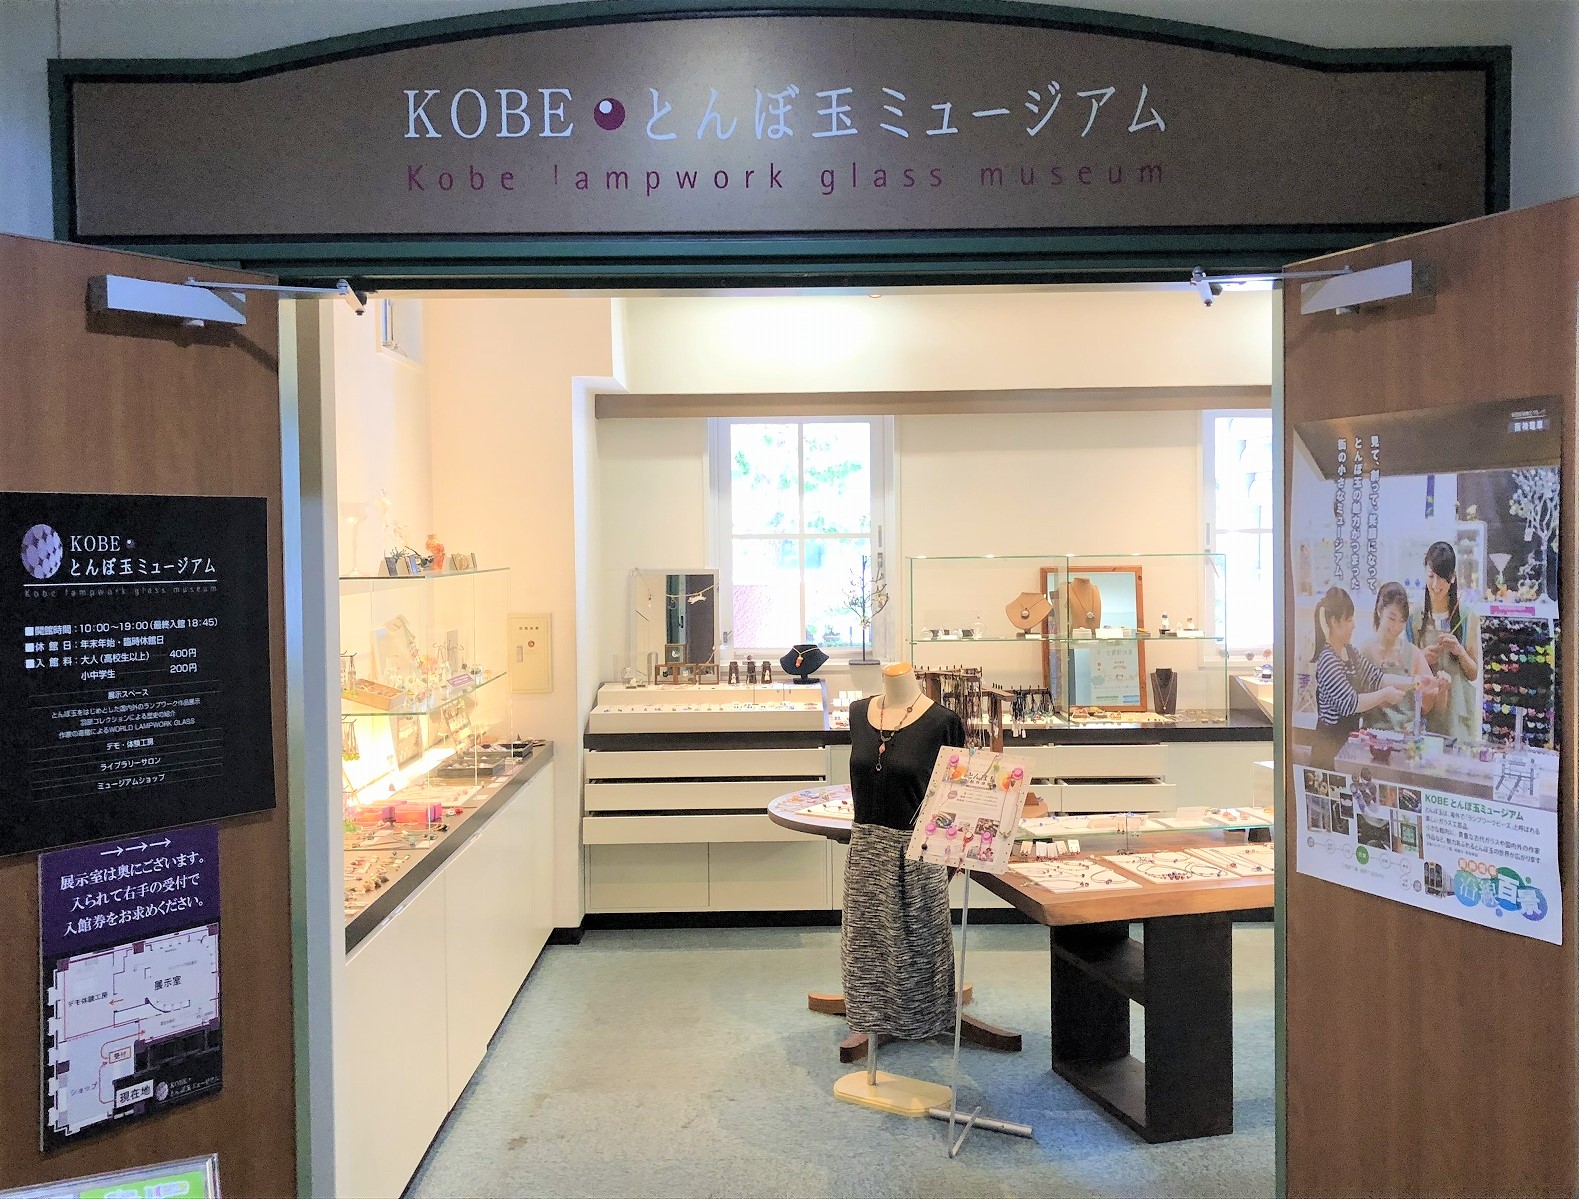 Kobeとんぼ玉ミュージアム で美しいとんぼ玉を見学してきた Kobeとんぼ玉ミュージアム とんぼ玉 神戸観光 博物館めぐり 東灘ジャーナル